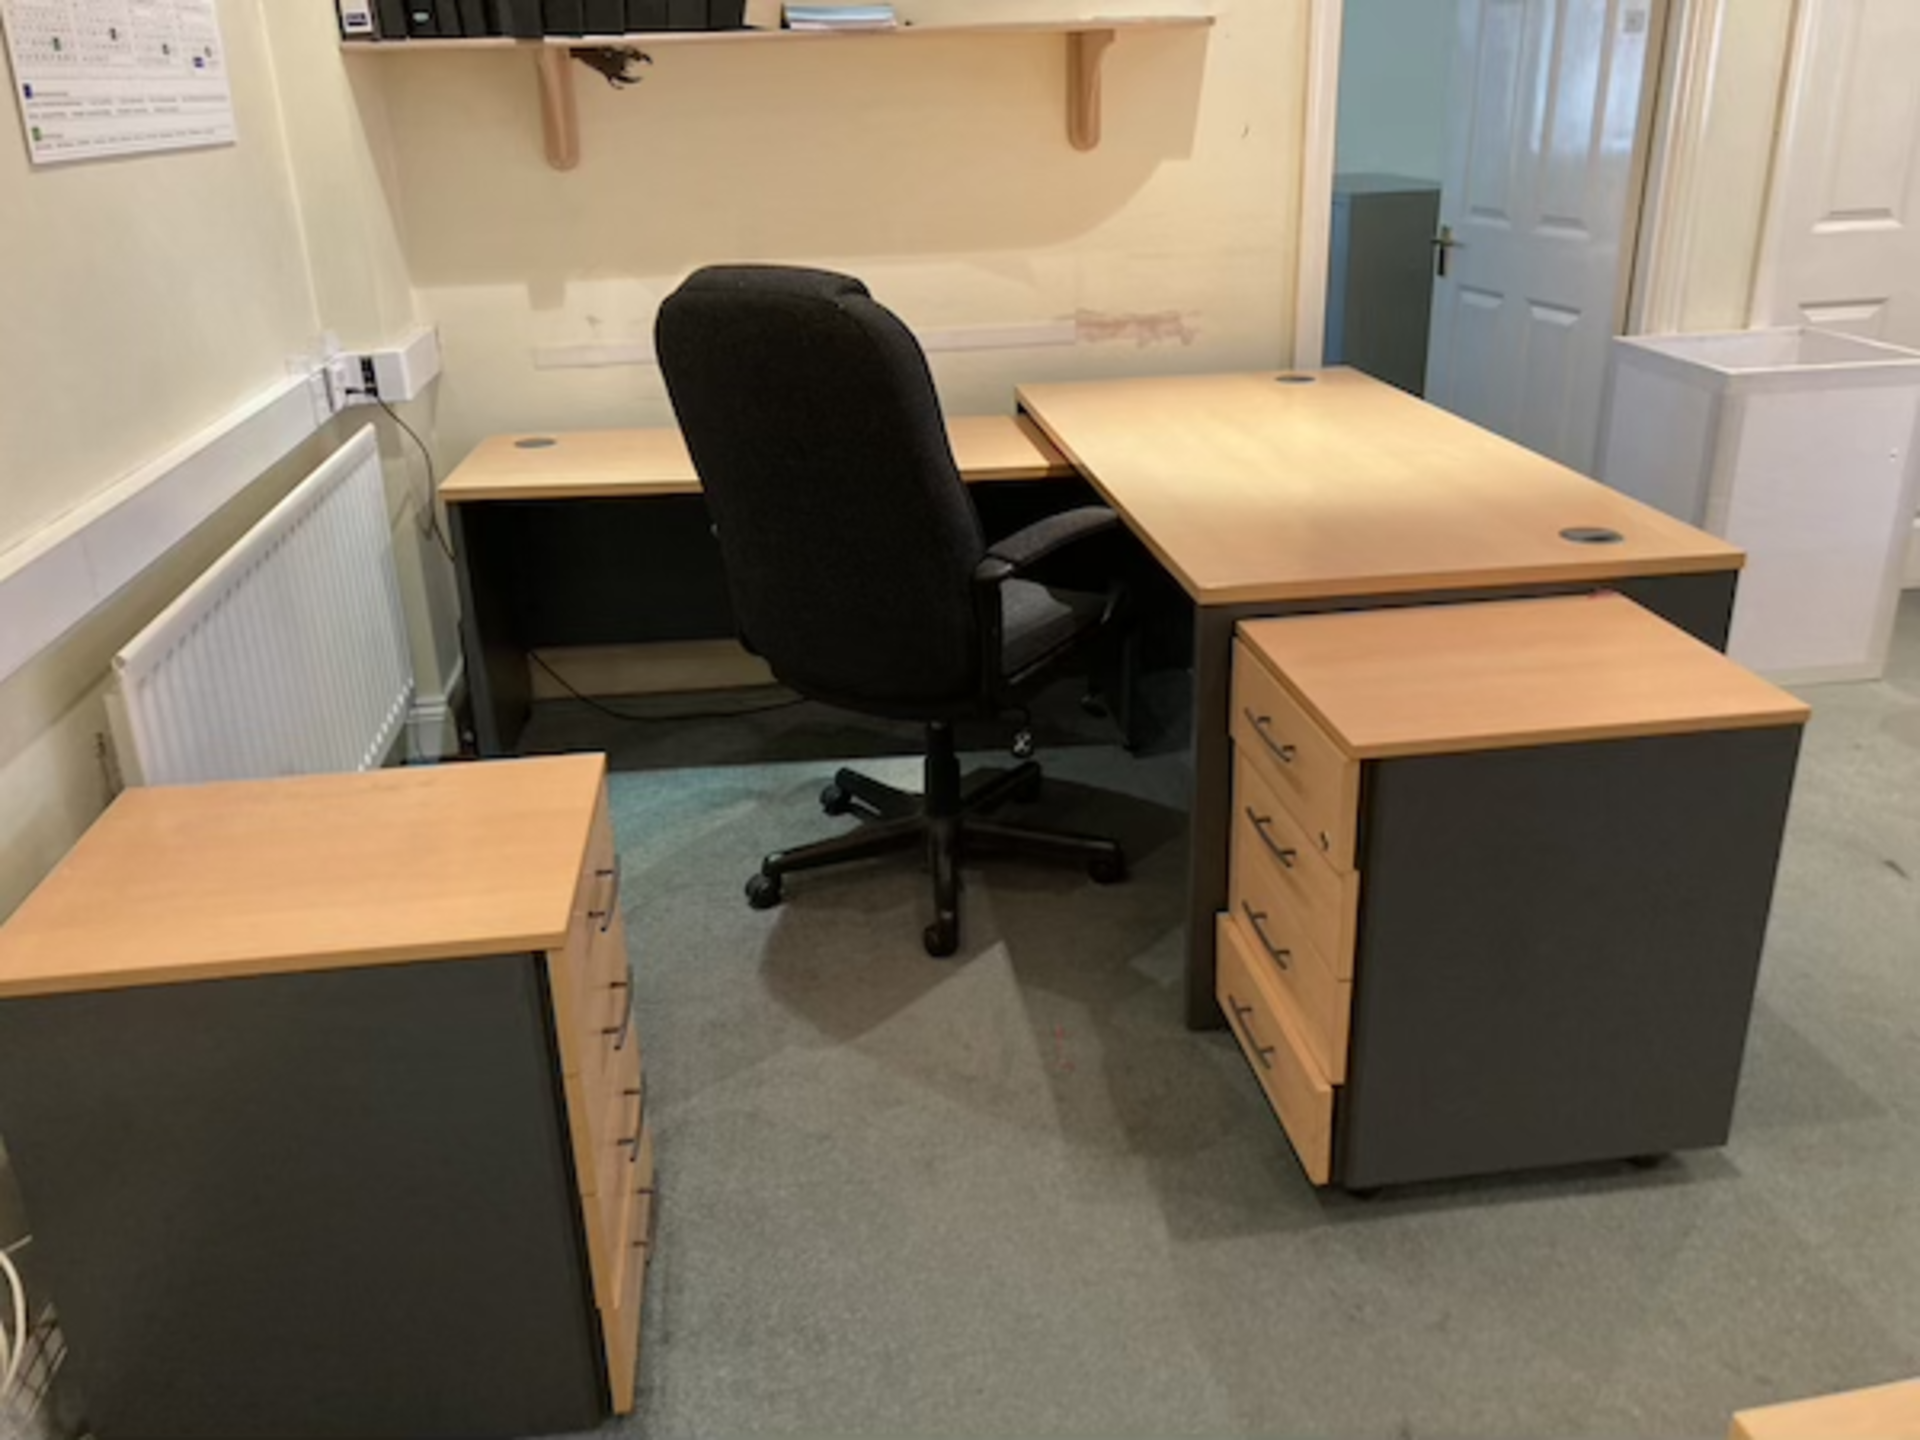 Slab side desk (1600mm) with return unit, 2 x four drawer pedestals, gas lift office chair